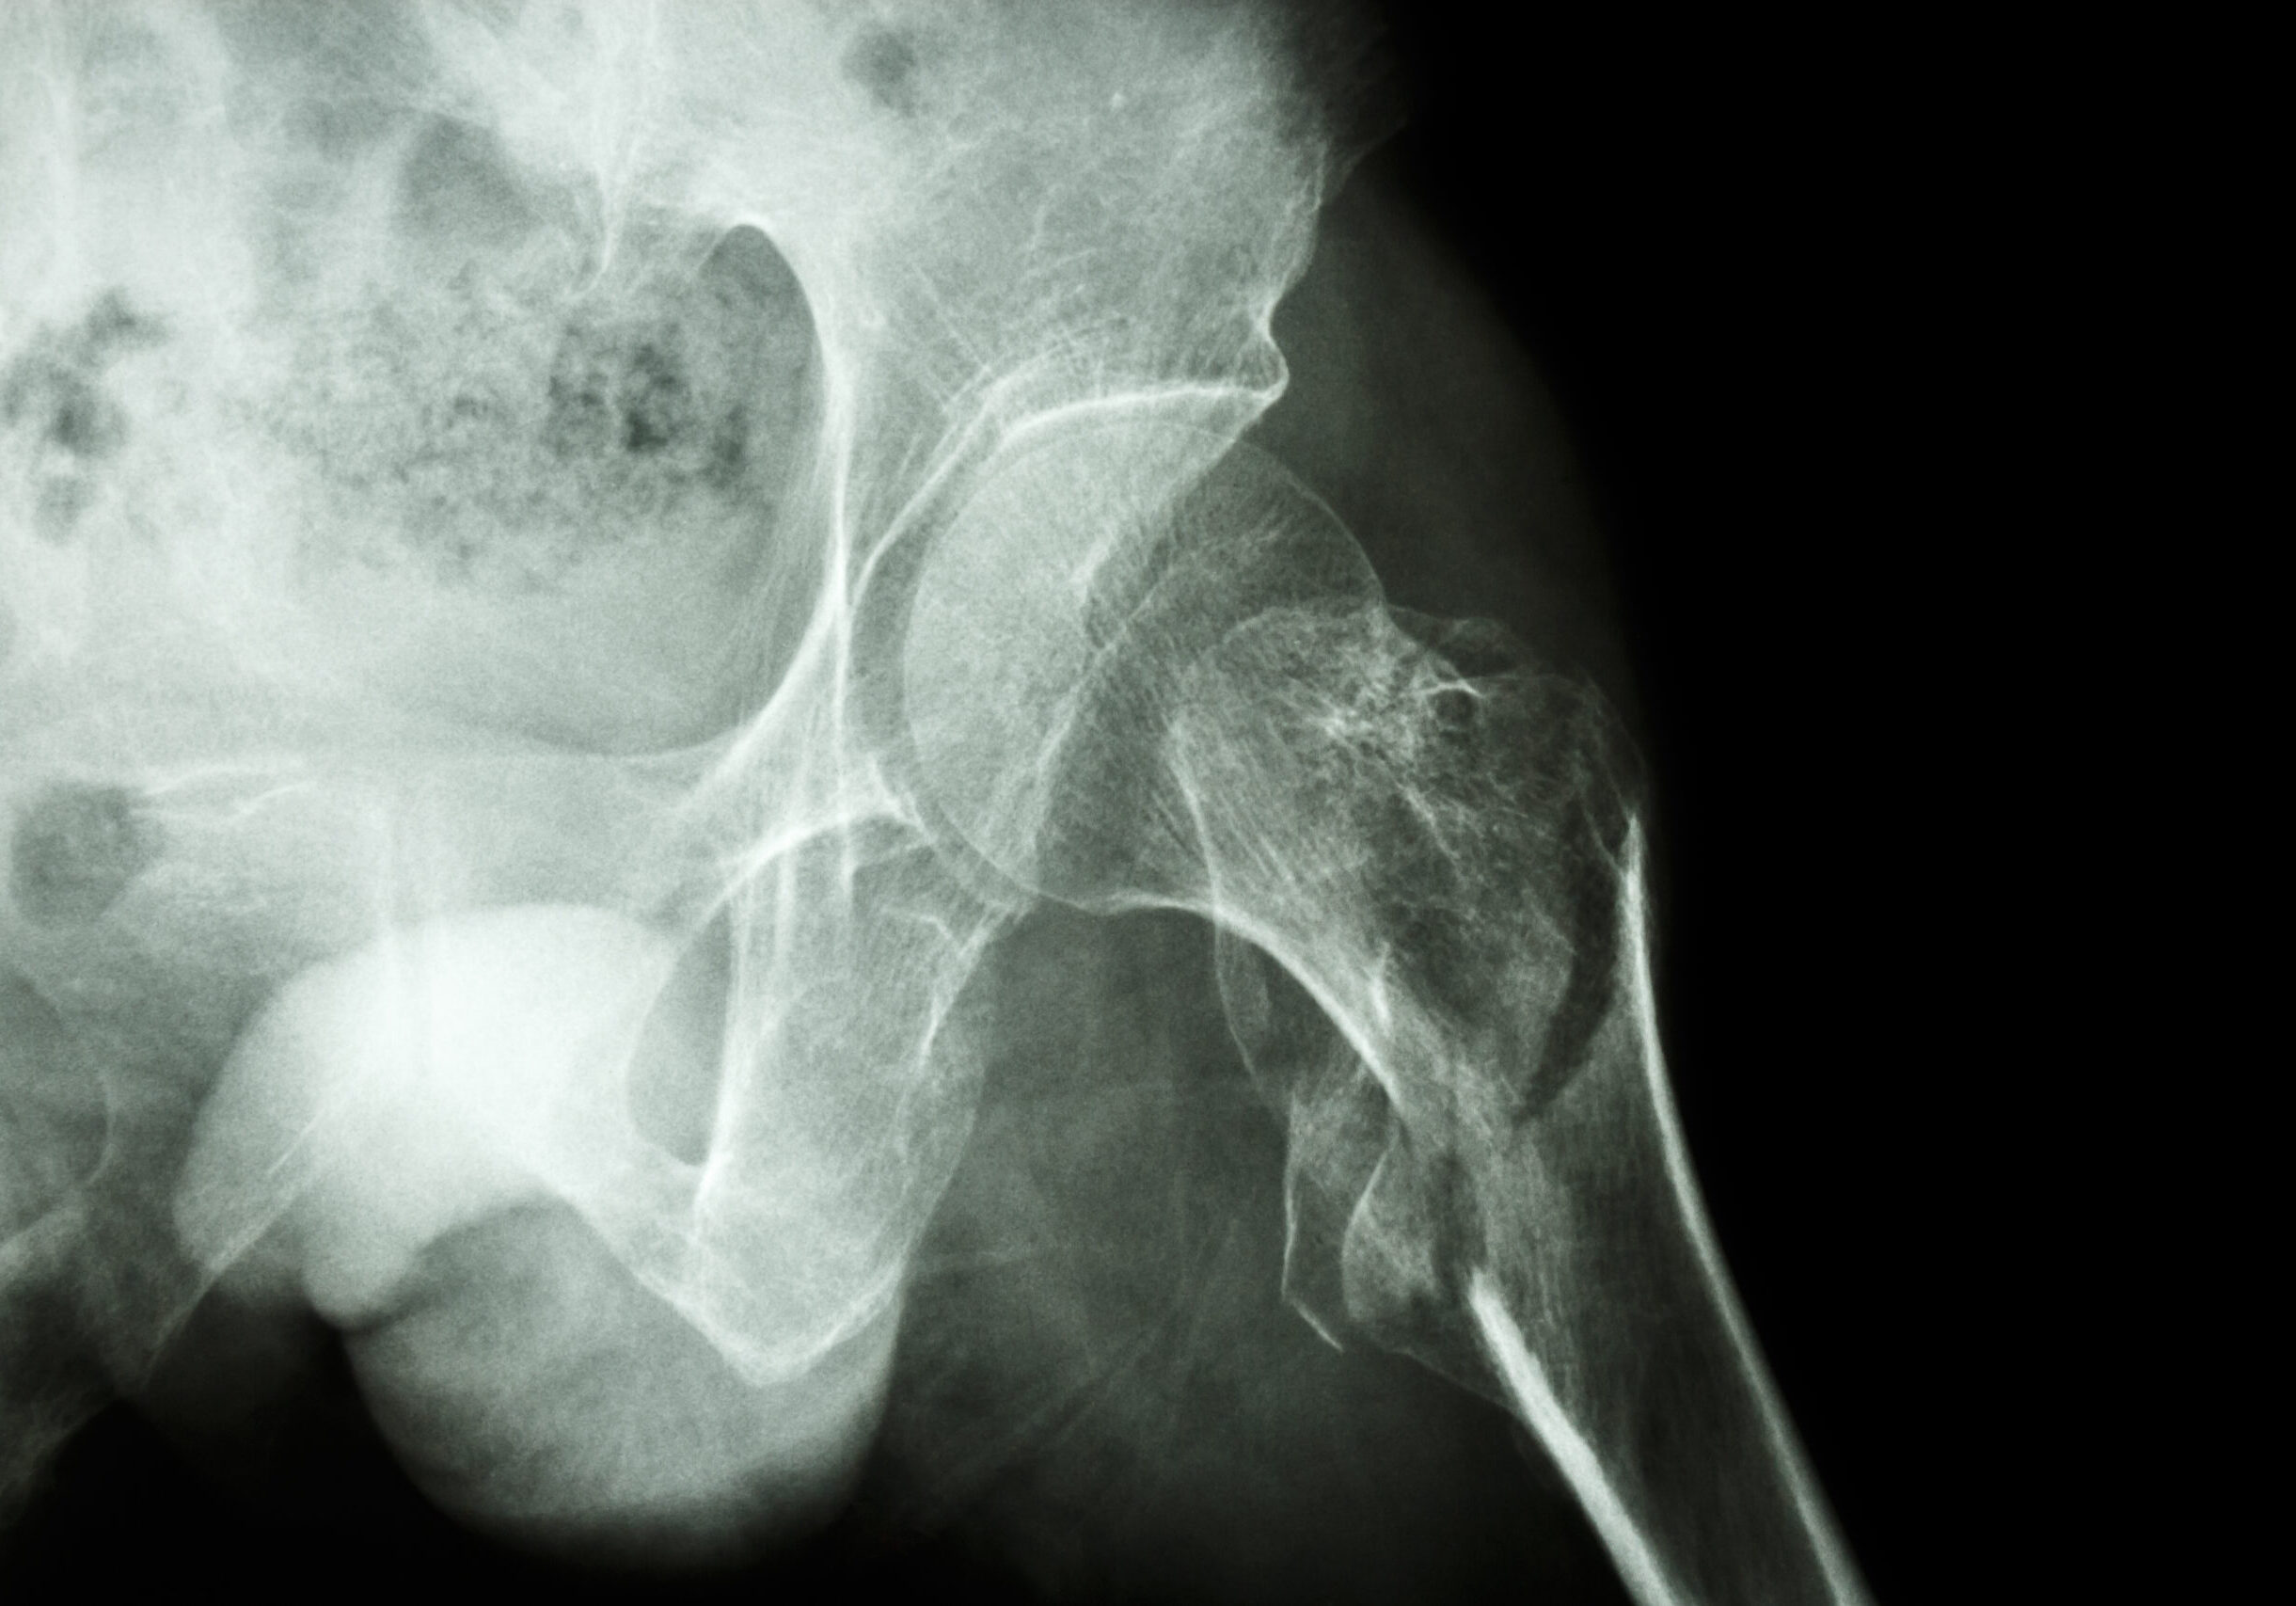 film x-ray show intertrochanteric fracture left femur